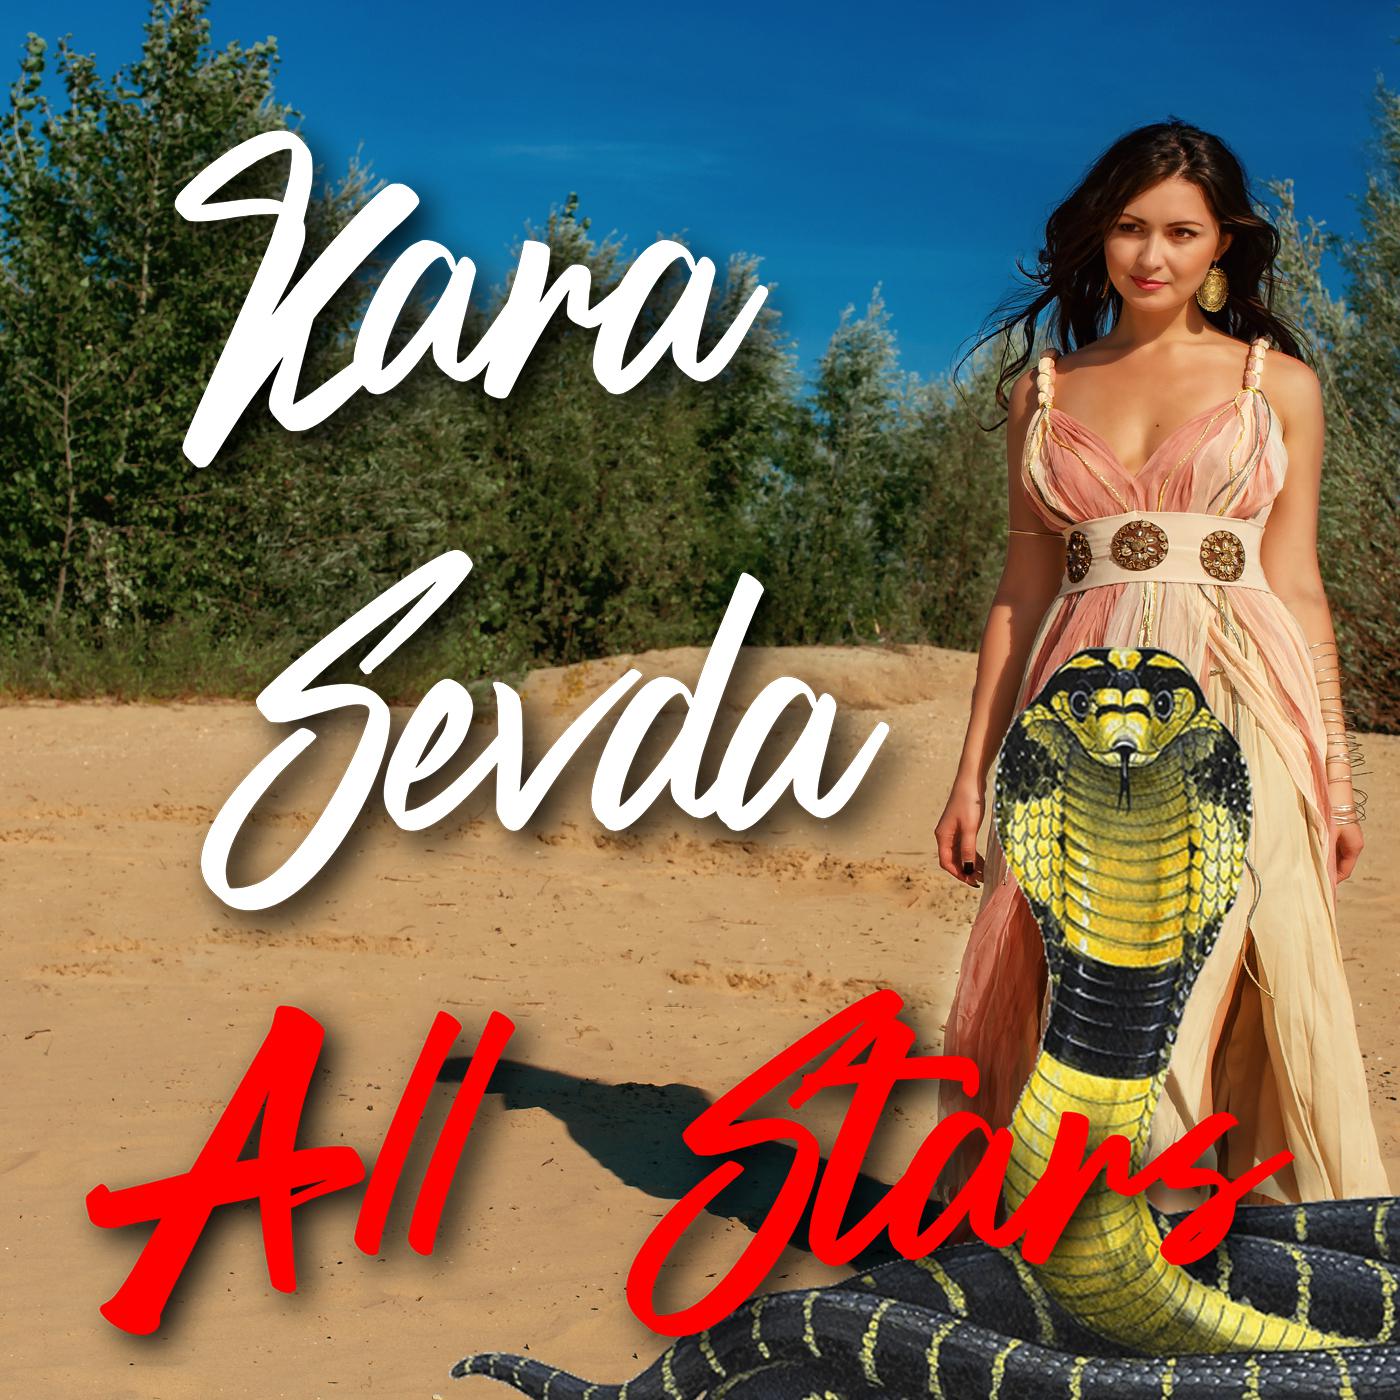 Постер альбома Kara Sevda